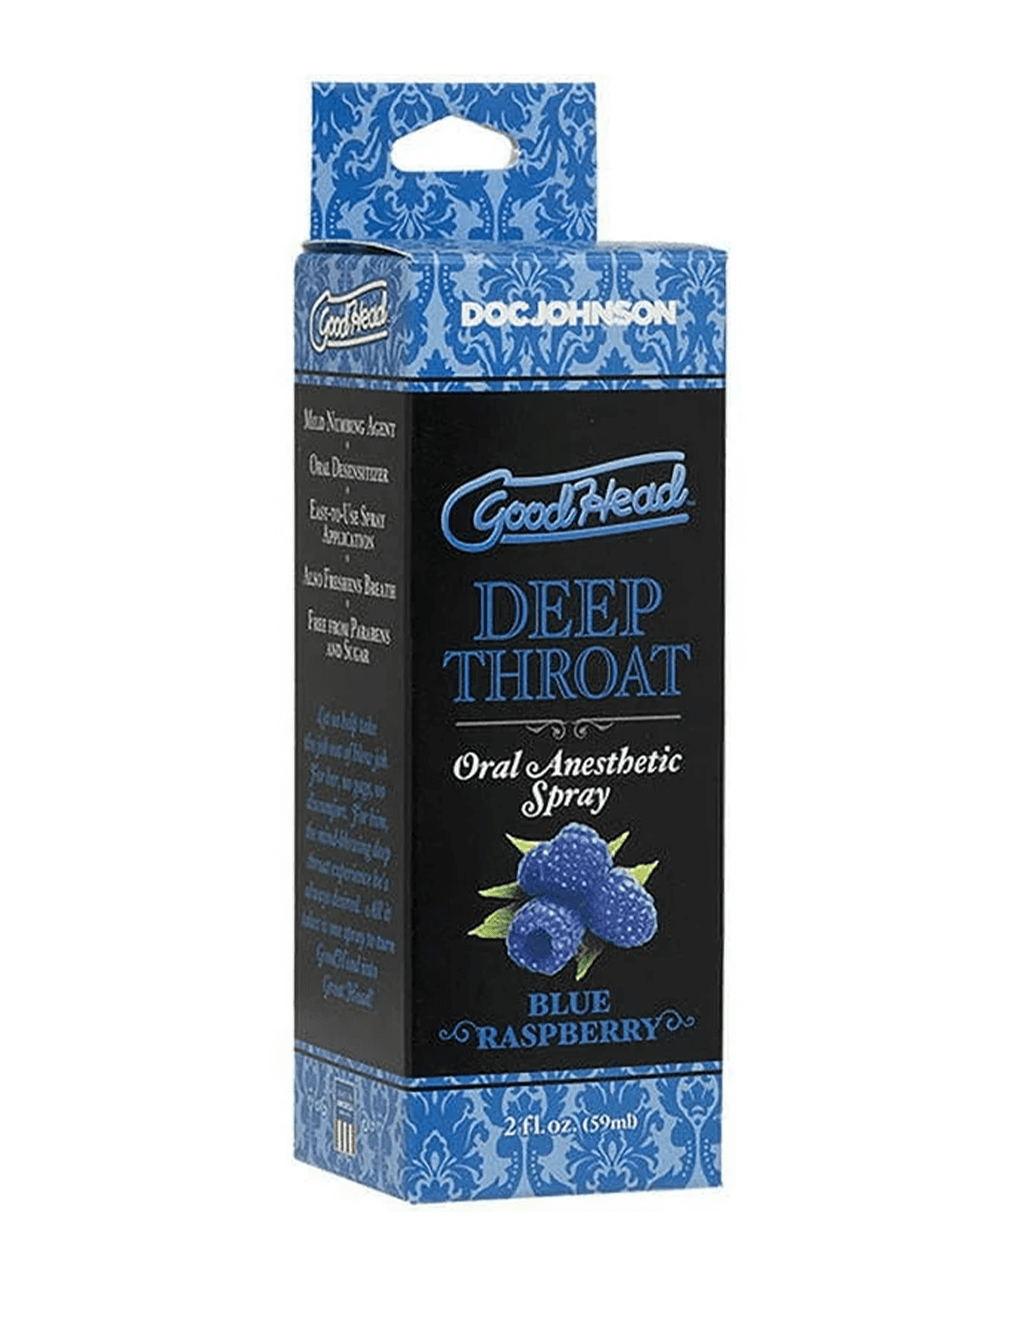 Goodhead Deep Throat Desensitizing Spray 2 oz Blue Rasperberry Package